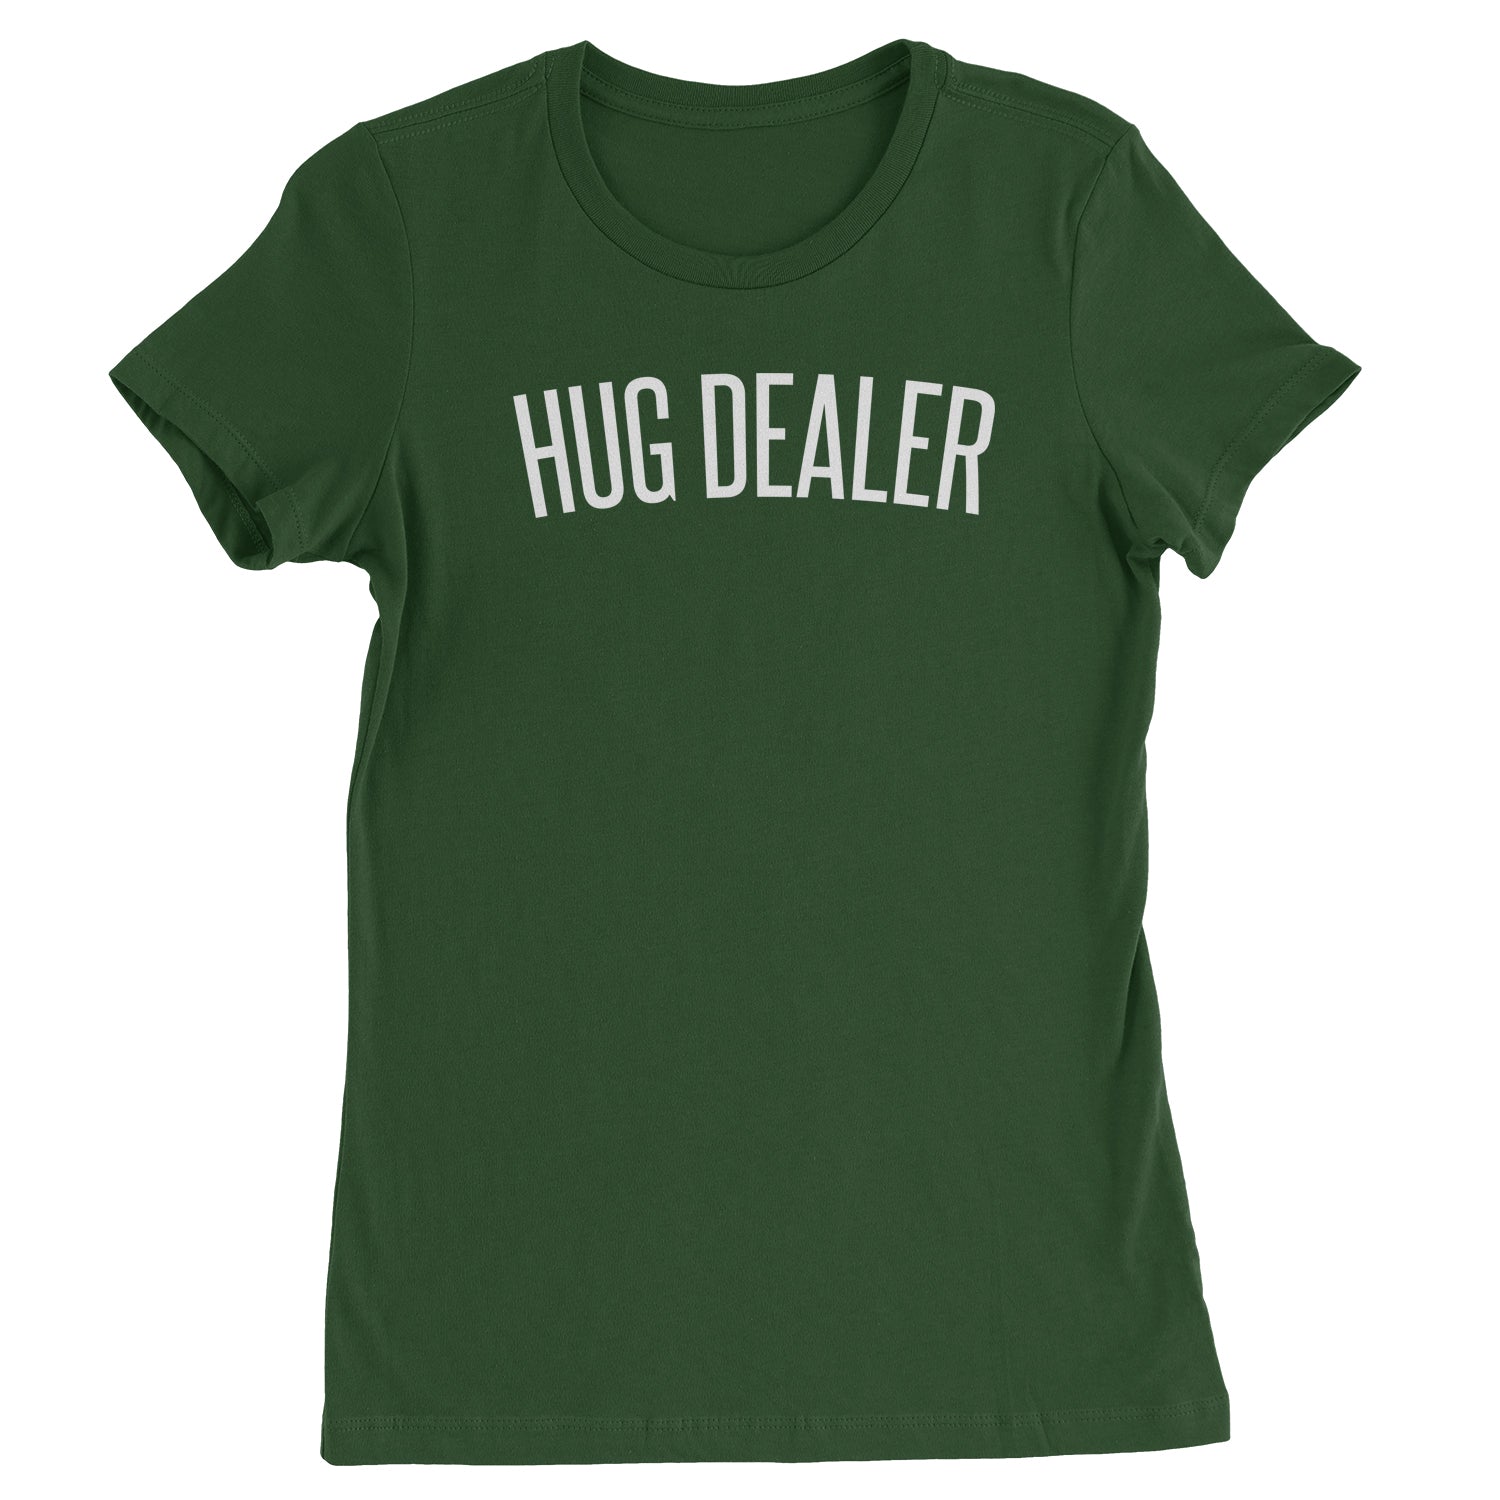 Hug Dealer Womens T-shirt dealing, free, hug, hugger, hugs by Expression Tees